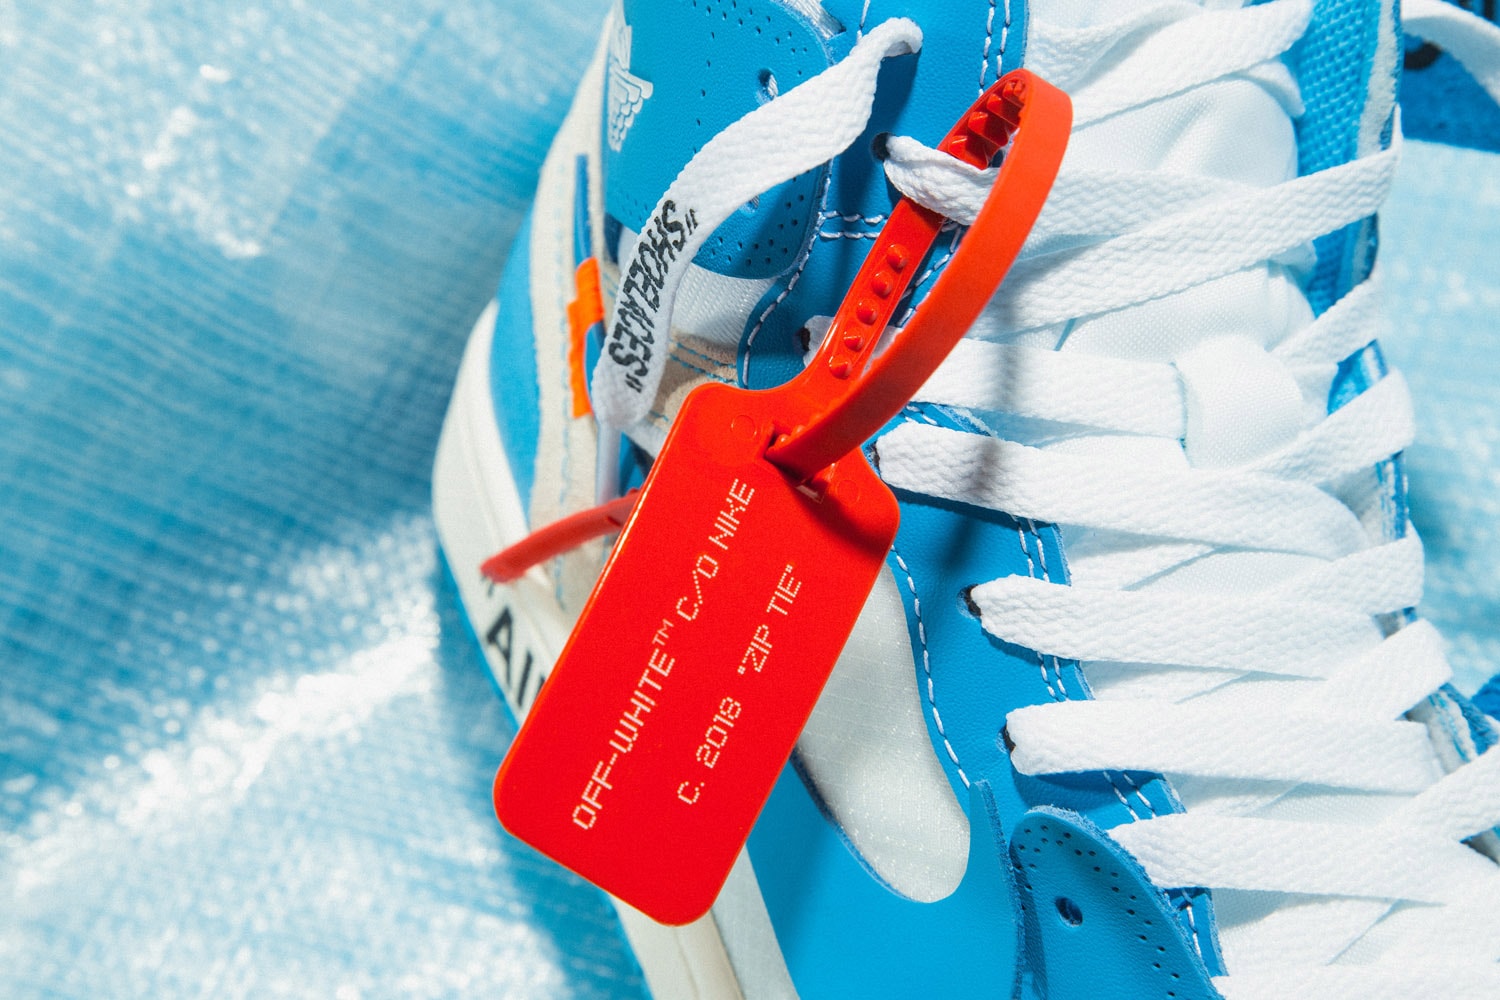 Virgil Abloh x Nike Air Jordan 1 "Dark Powder Blue" Collab Collaboration New Colorway Closer Look Coming Soon U.S. Exclusive On-Foot